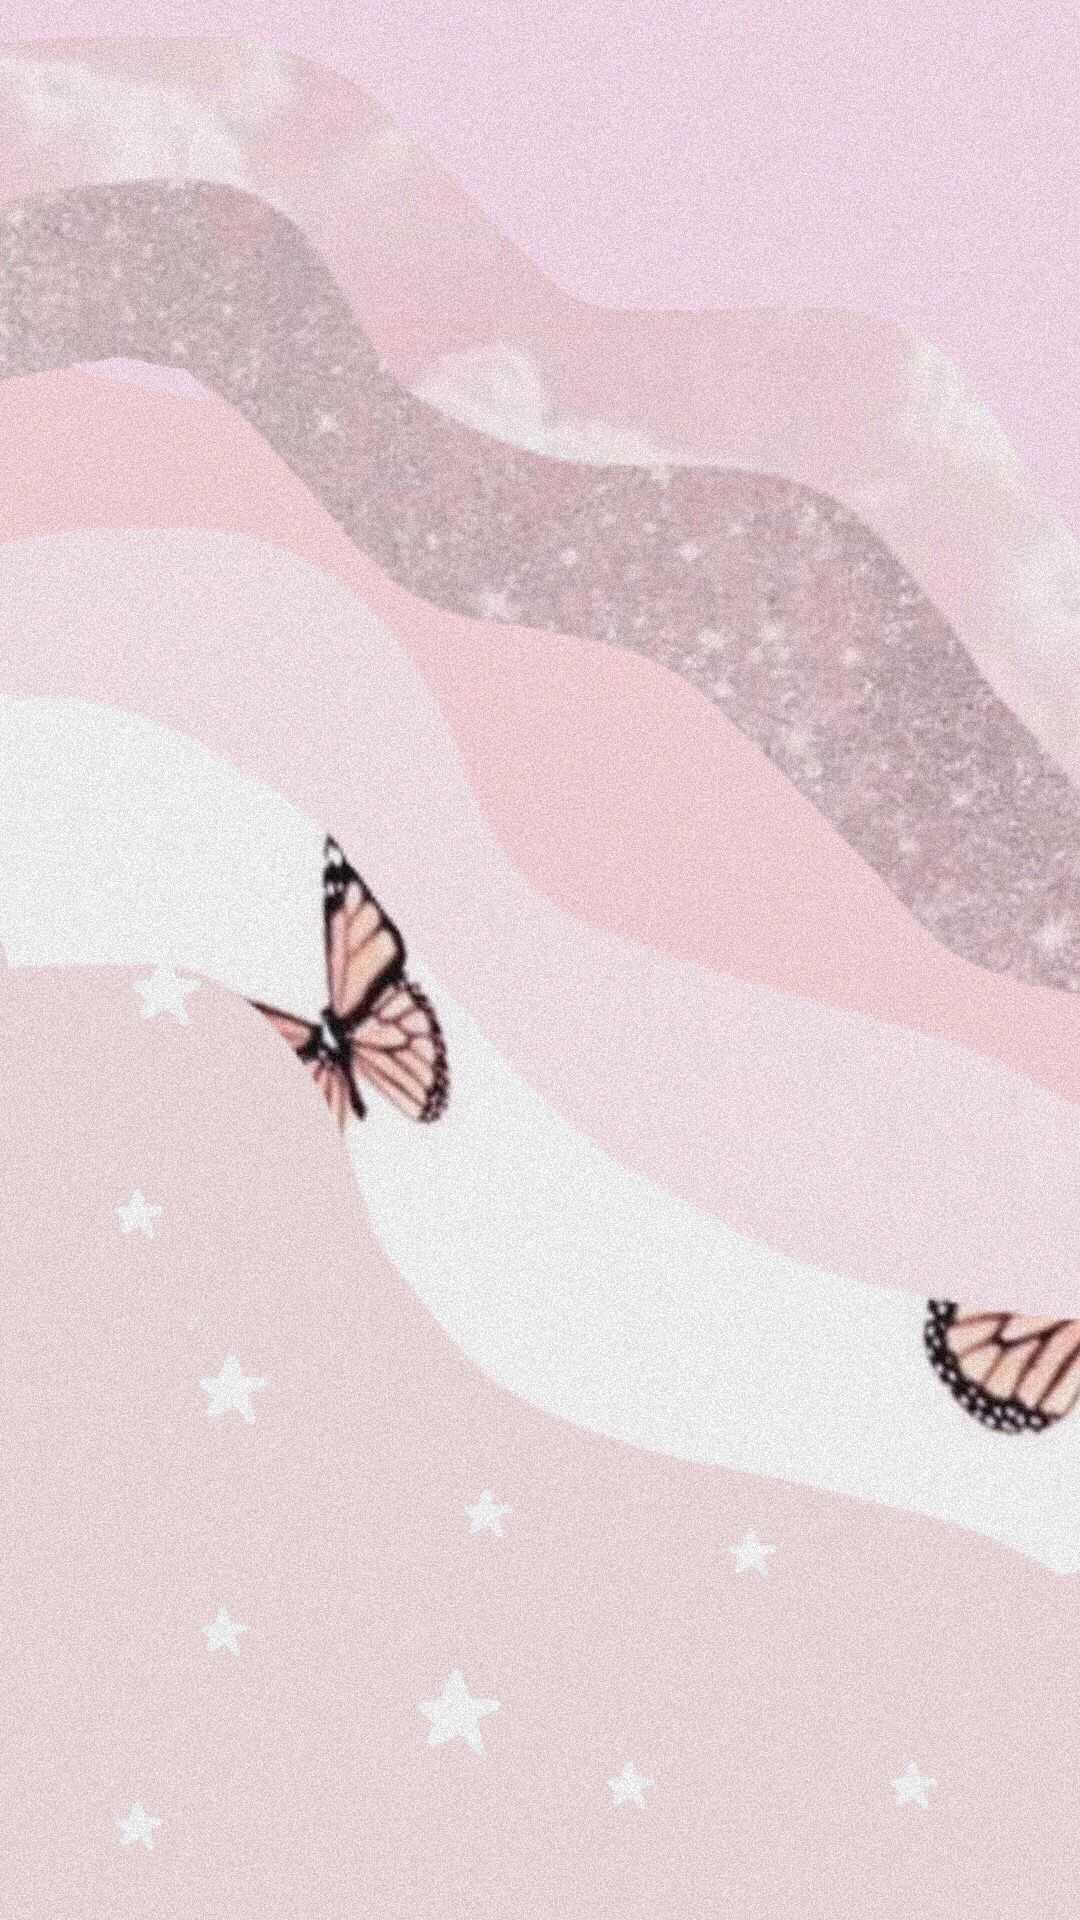 Aesthetic wallpaper of butterfly flying in the sky - Glitter